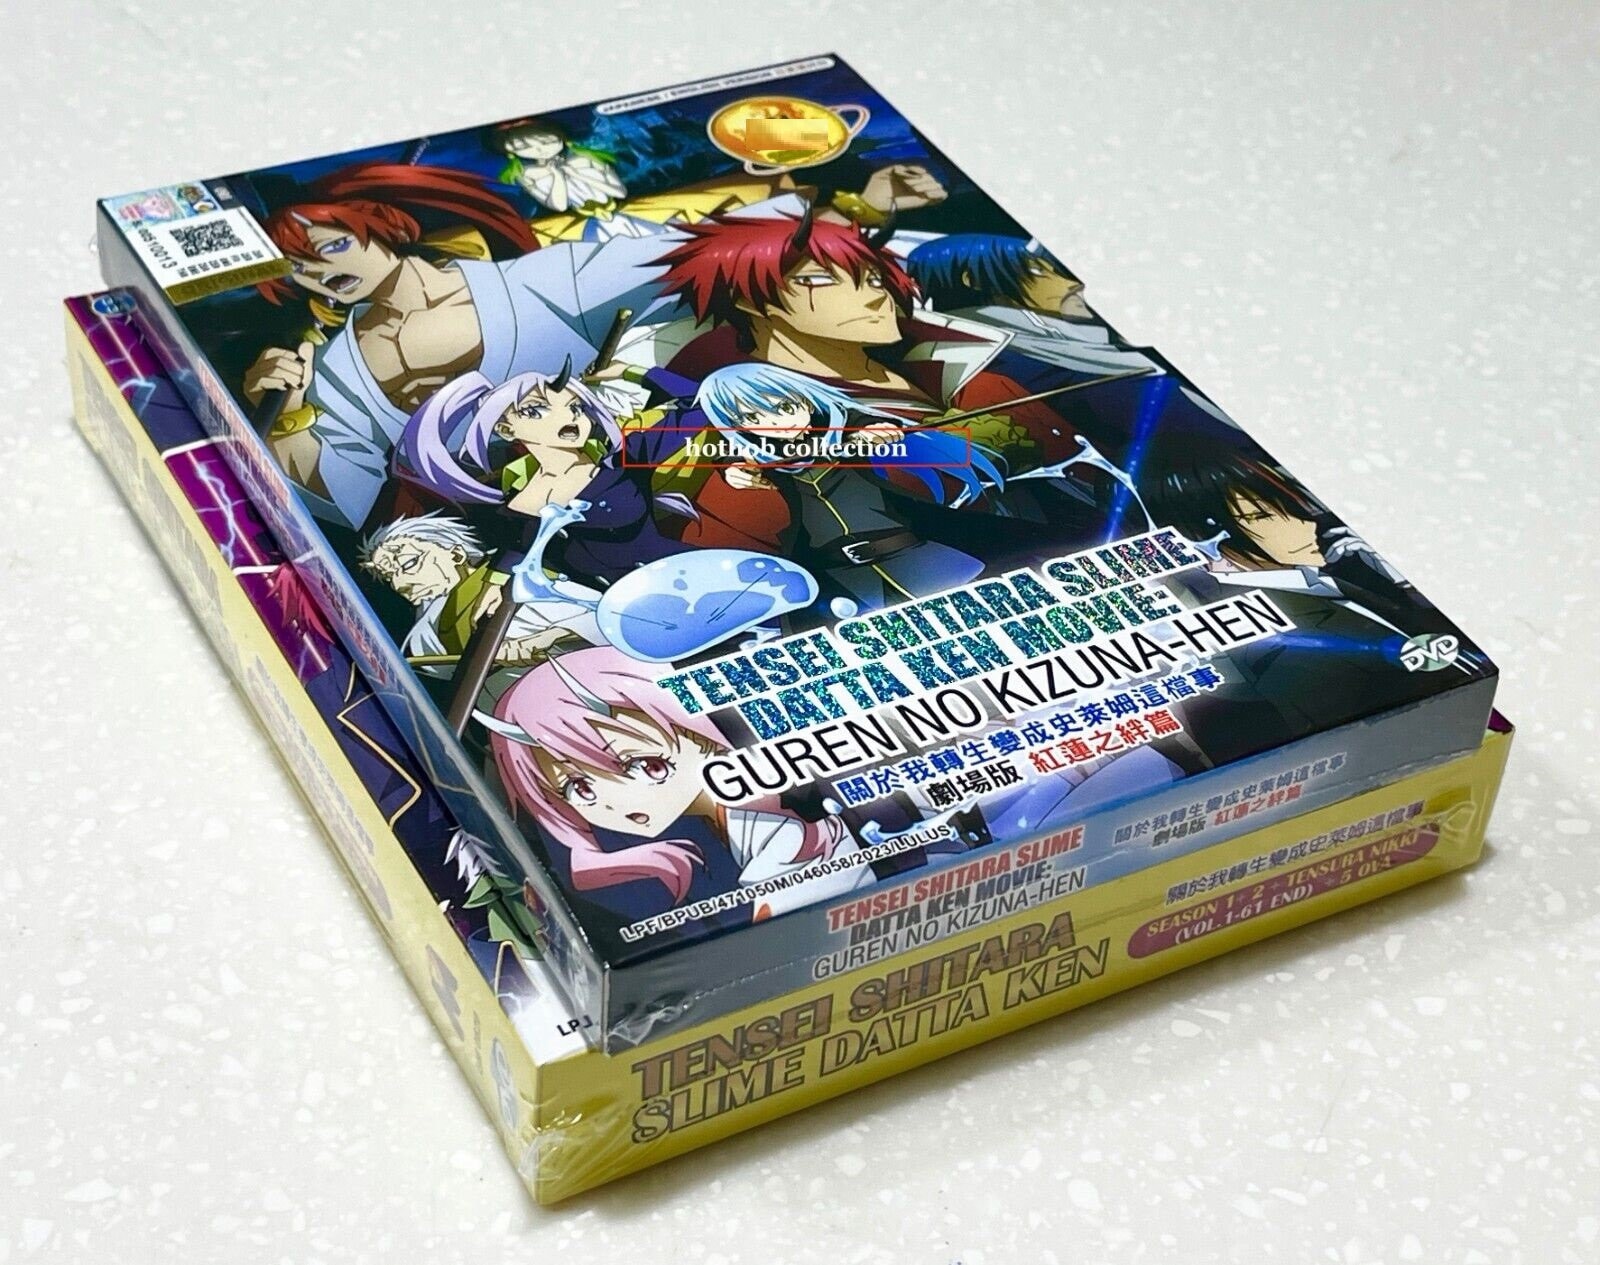 English dubbed of Tensei Shitara Slime Datta Ken Season 2 (1-24End) Anime  DVD